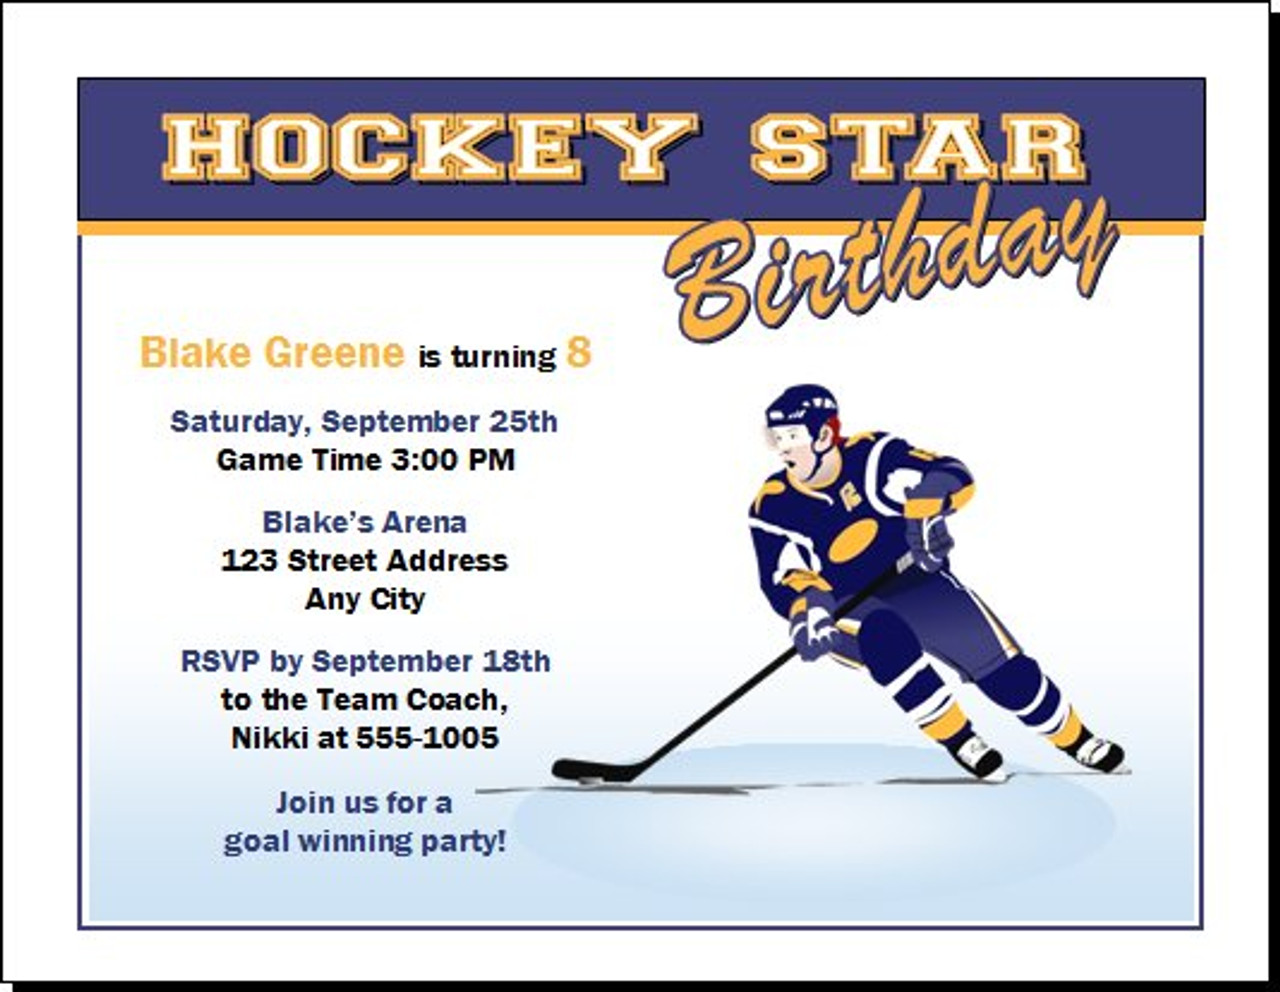 Hockey Birthday Party Invitation